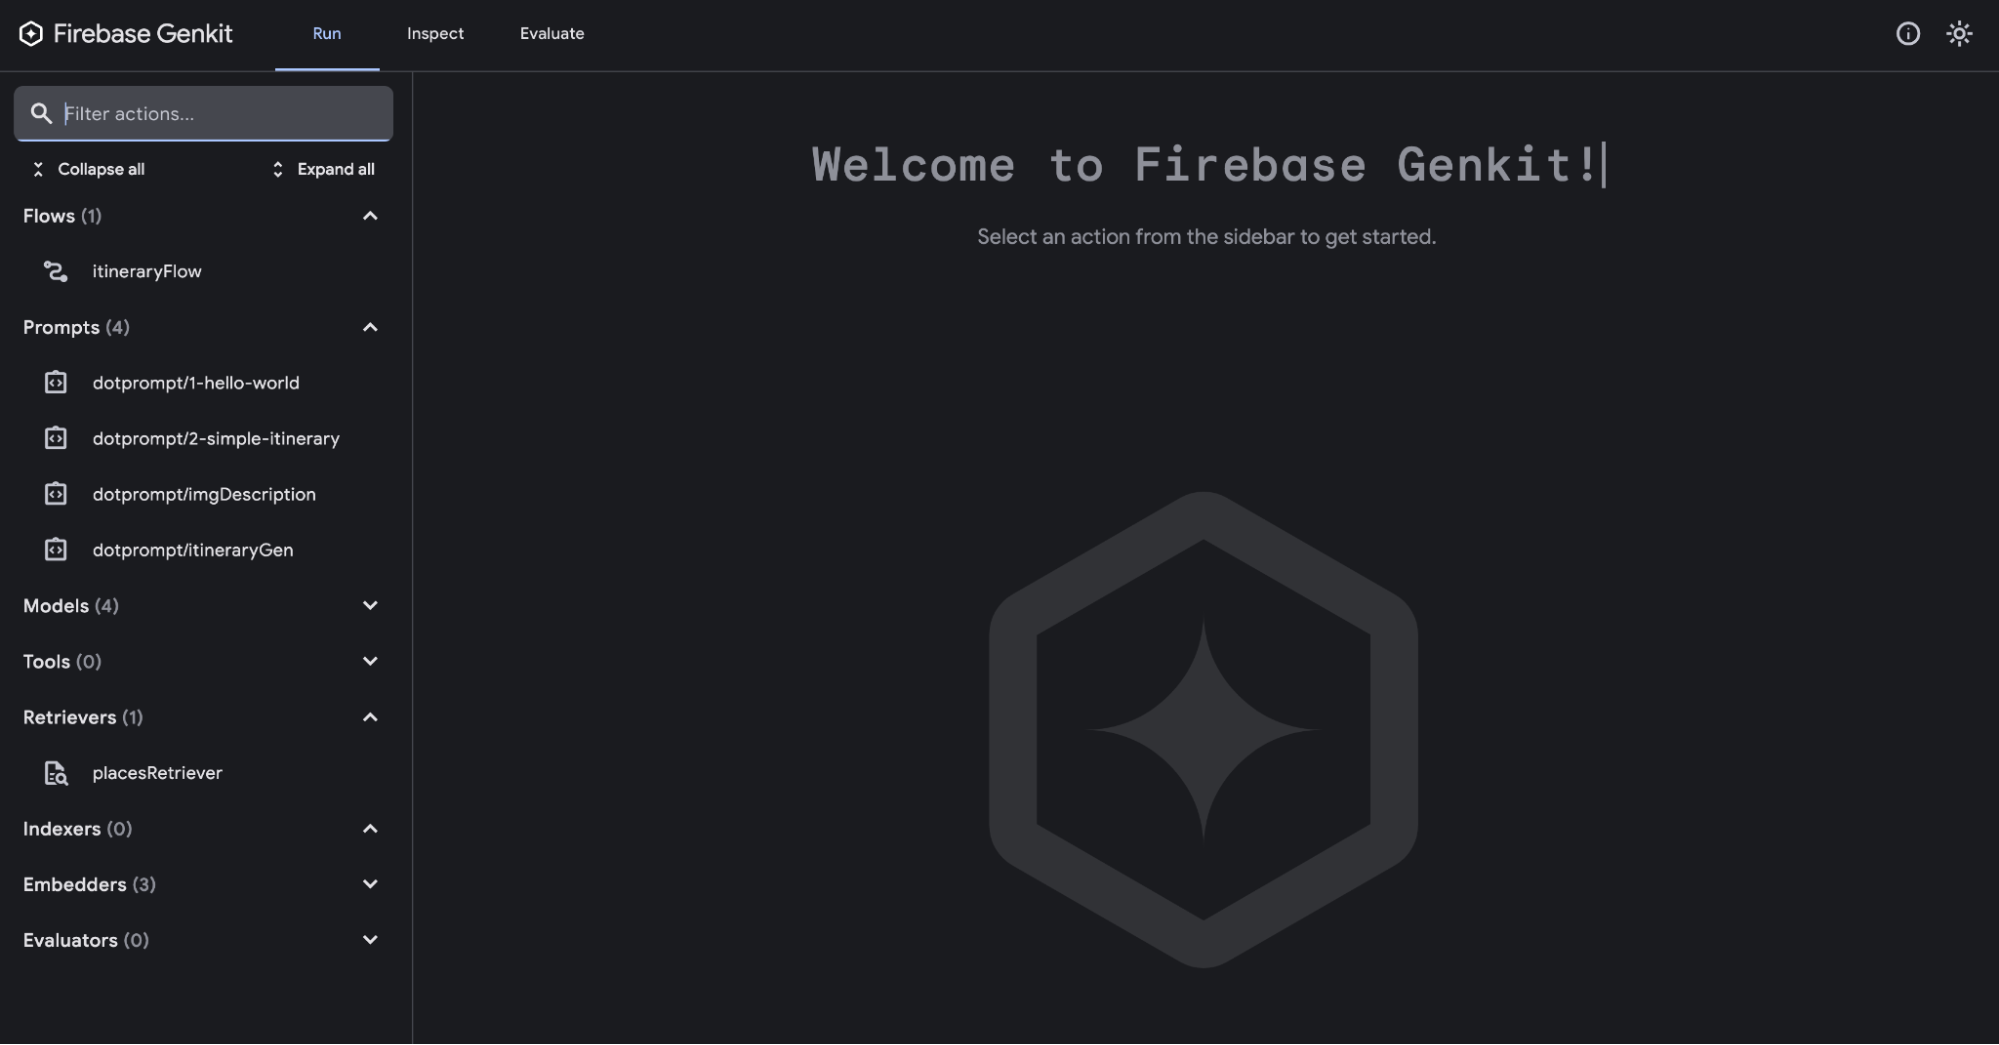 Welcome to Firebase Genkit